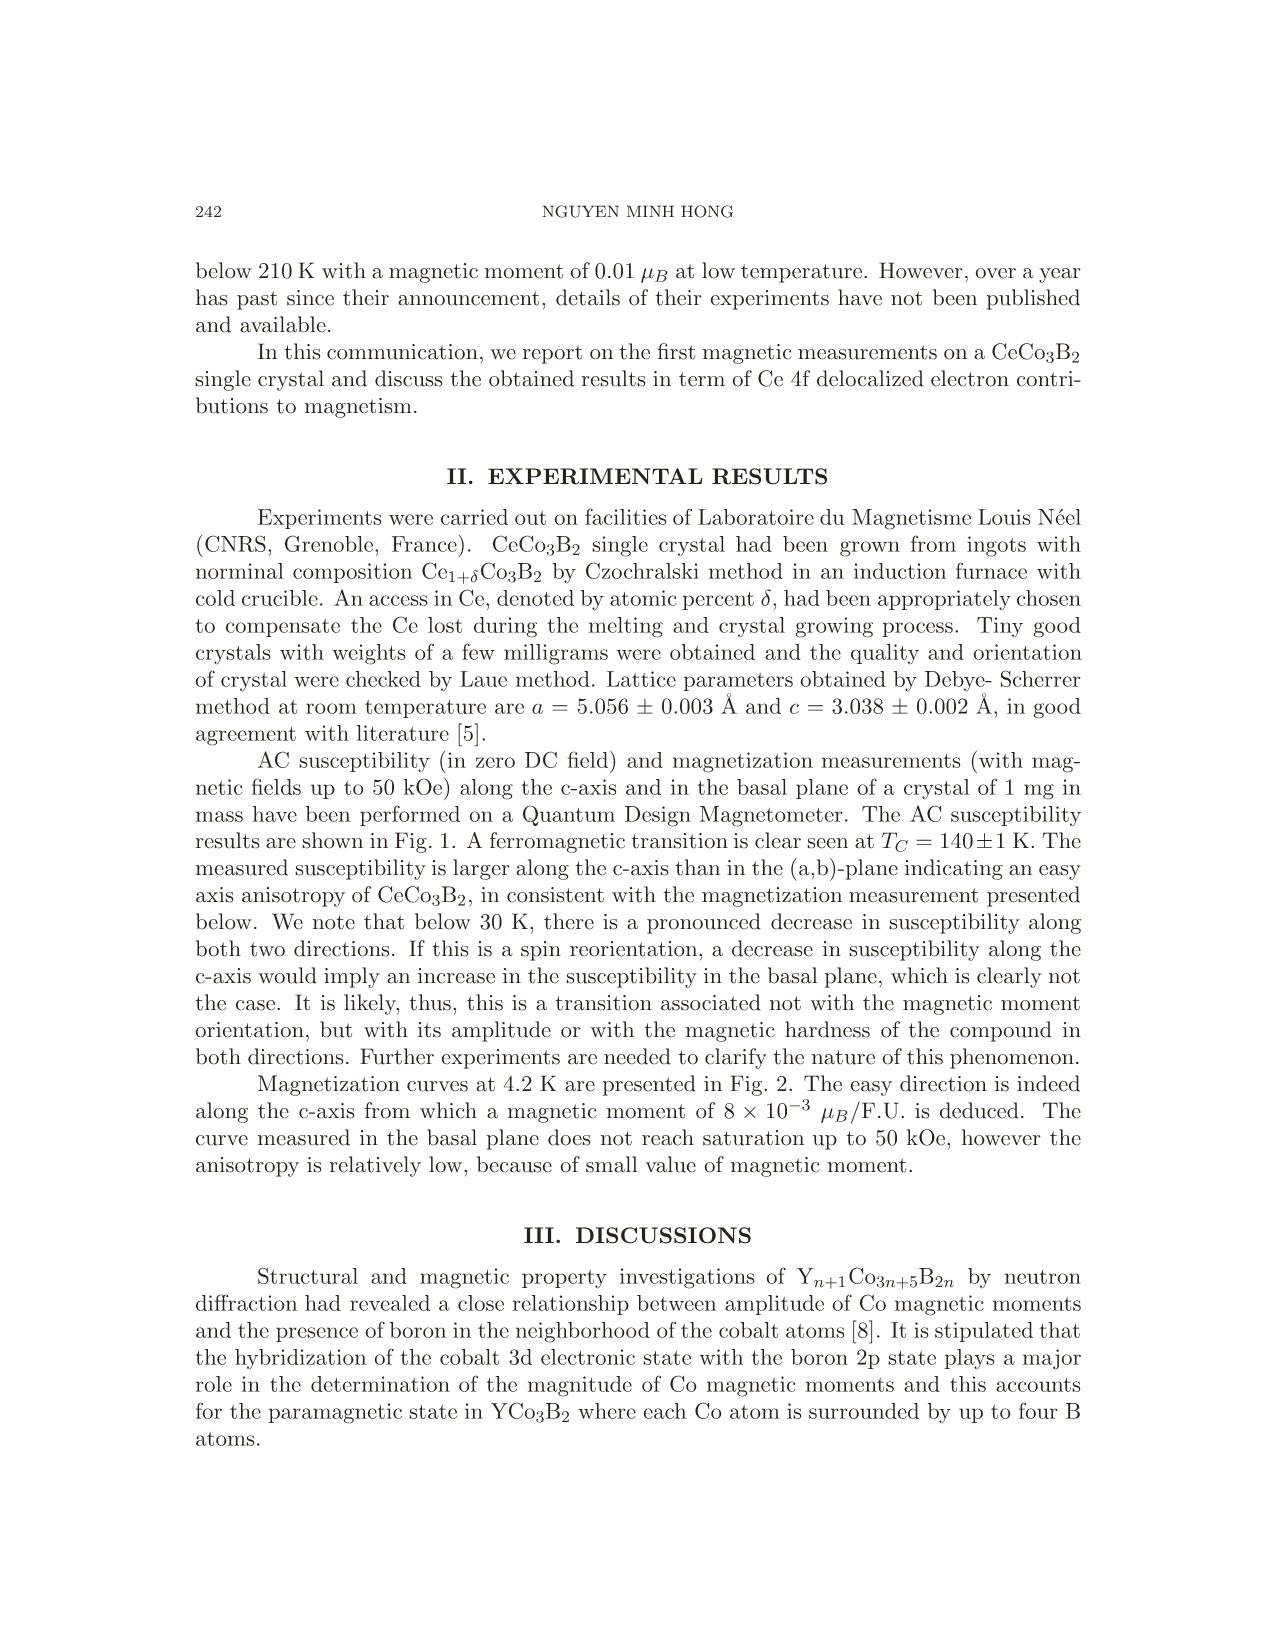 Ferromagnetism in CeCo3B2 trang 2